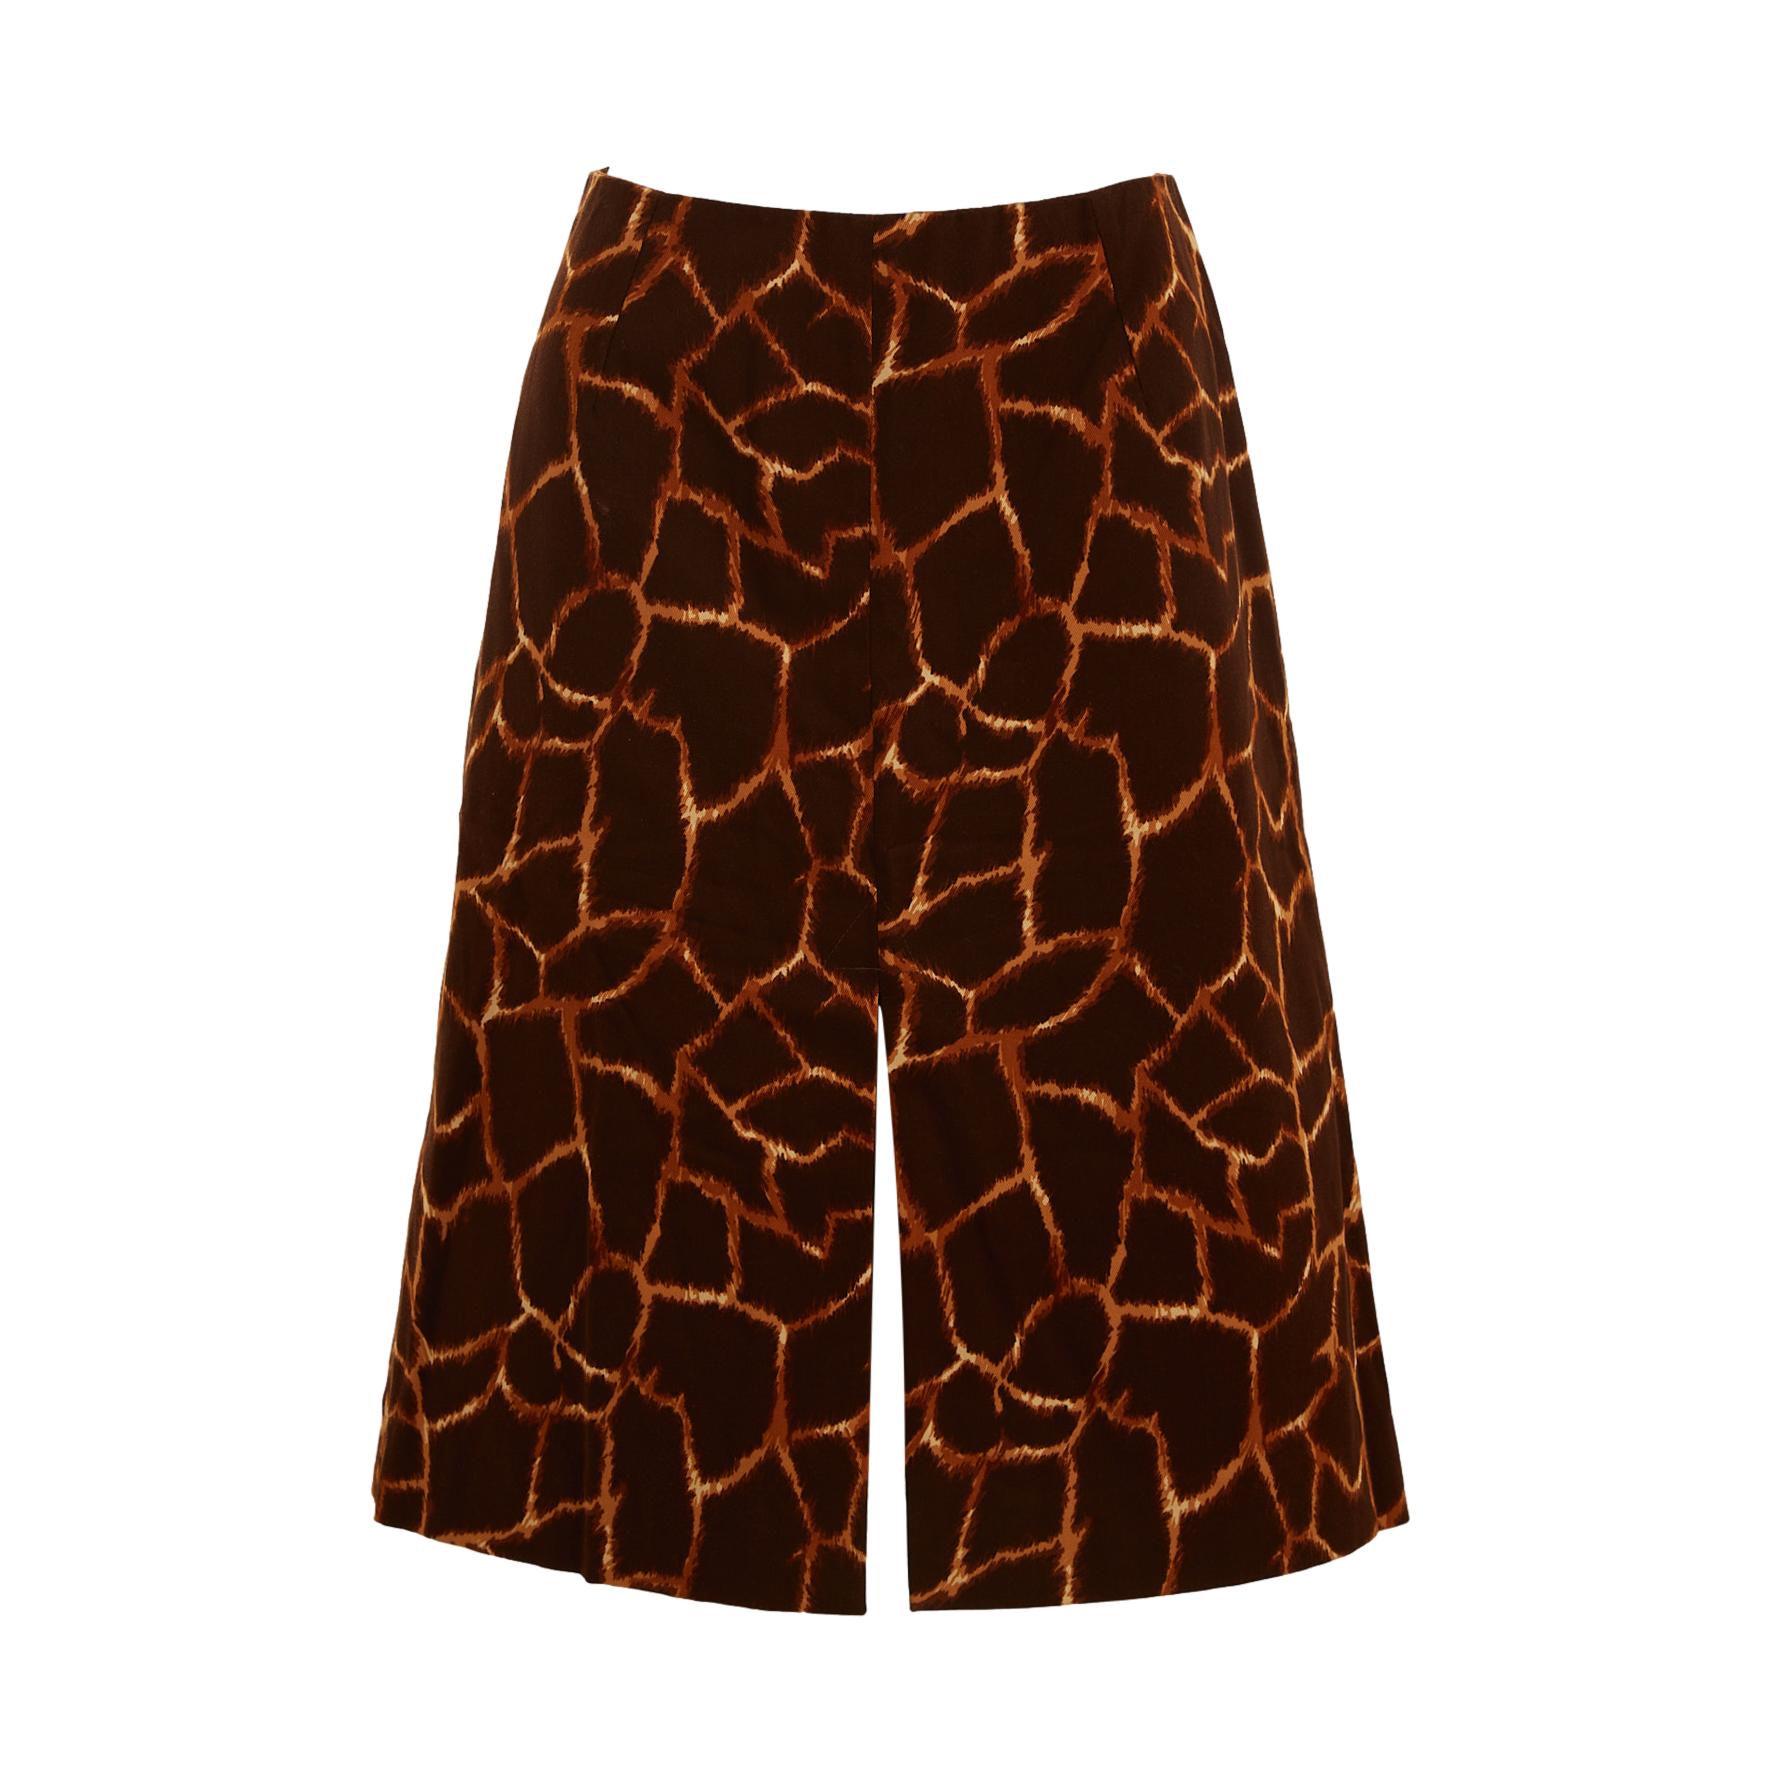 Dolce & Gabbana Brown Giraffe Print Skirt